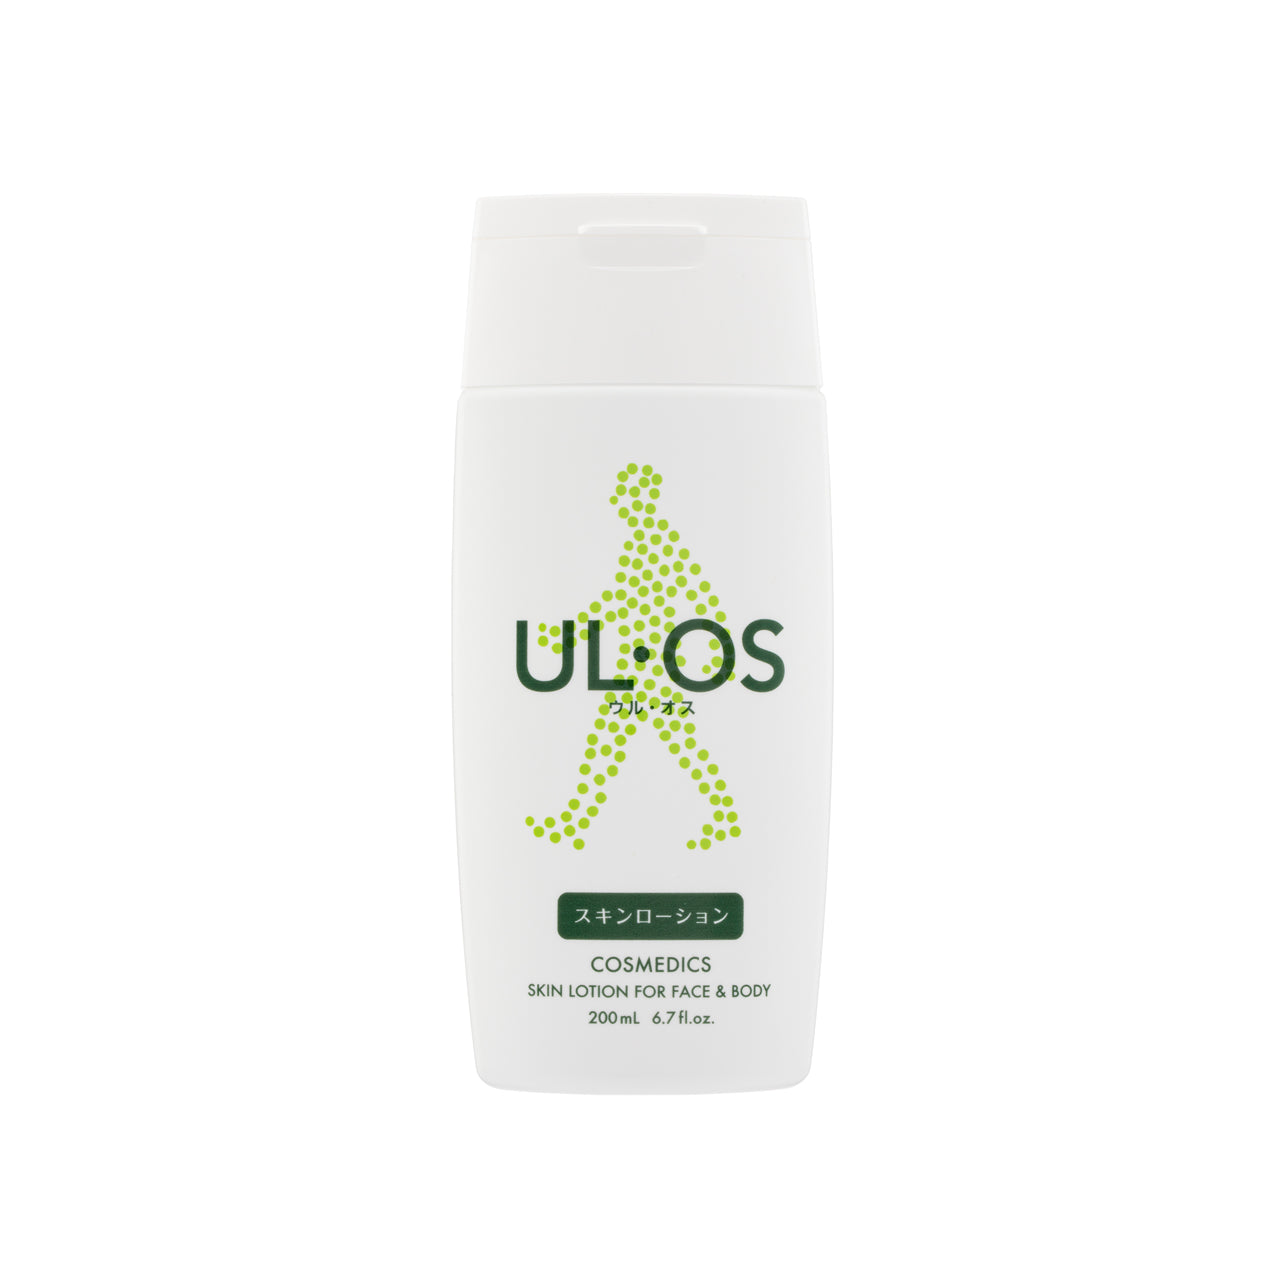 UL.OS Skin Lotion 200ml | Sasa Global eShop